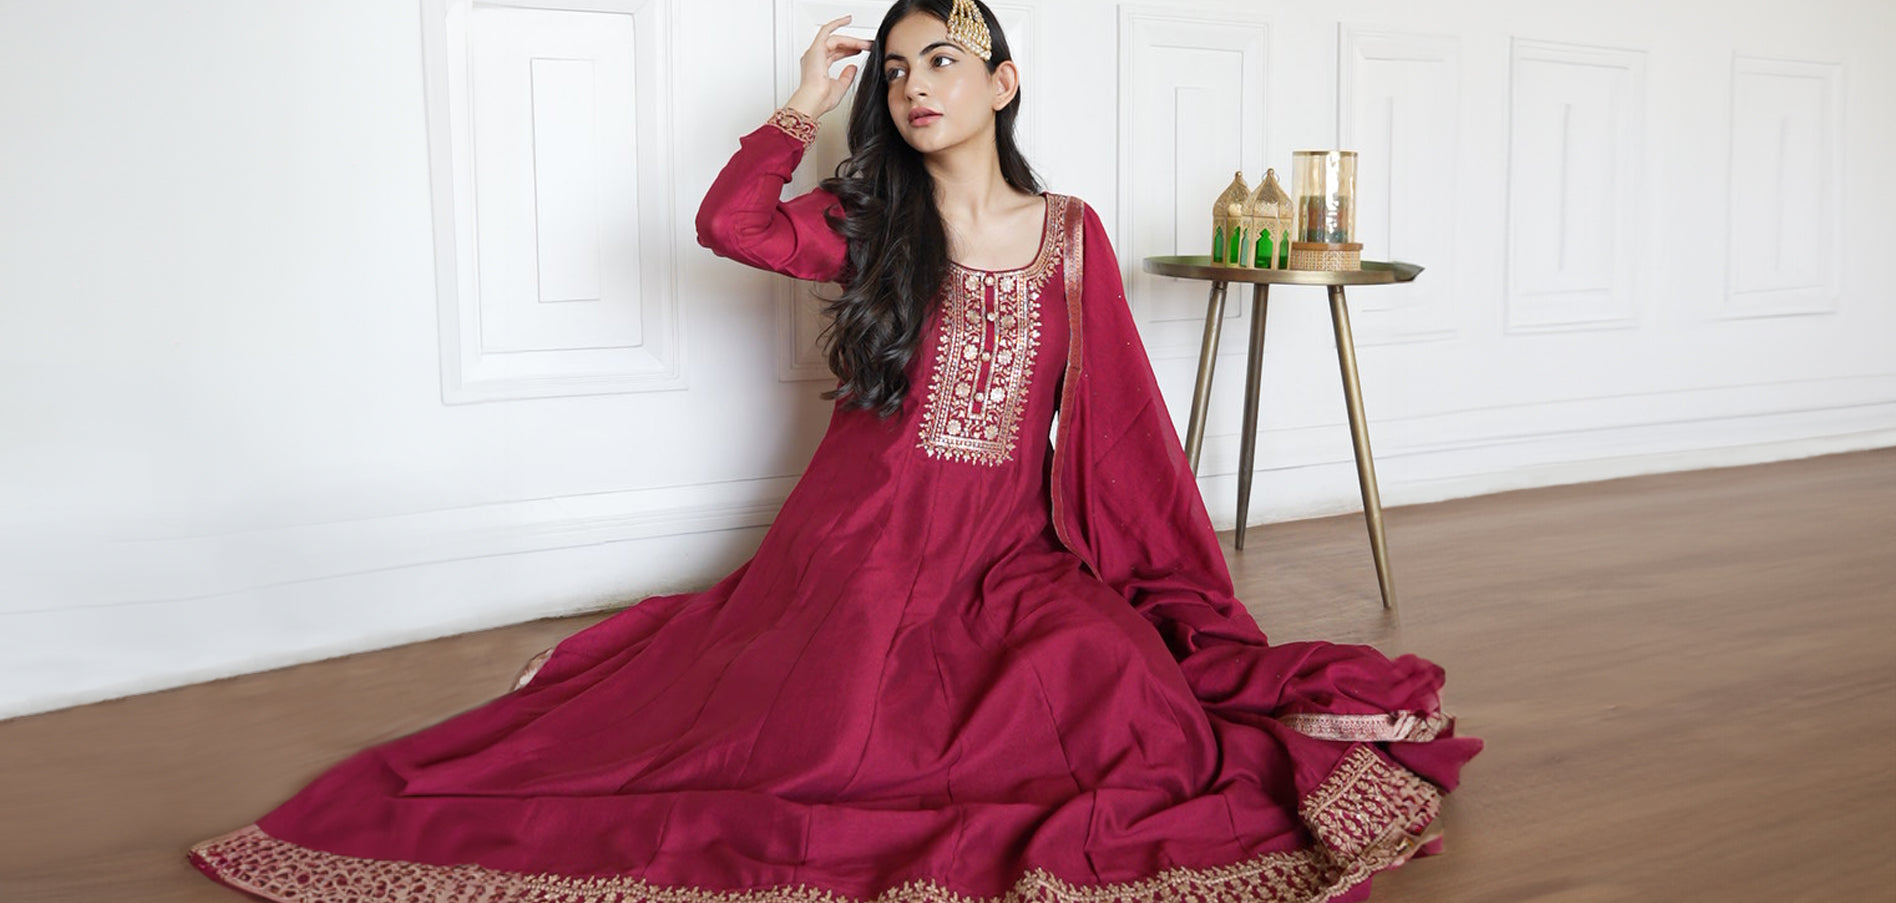 Shravana Sachdeva Blogs Bollywood Fashion Trends From King Khan\'s Friends  - Bridesmaid Outfit Ideas We Saw At The Shahrukh Khan Diwali Party! - Witty  Vows | BlogAdda